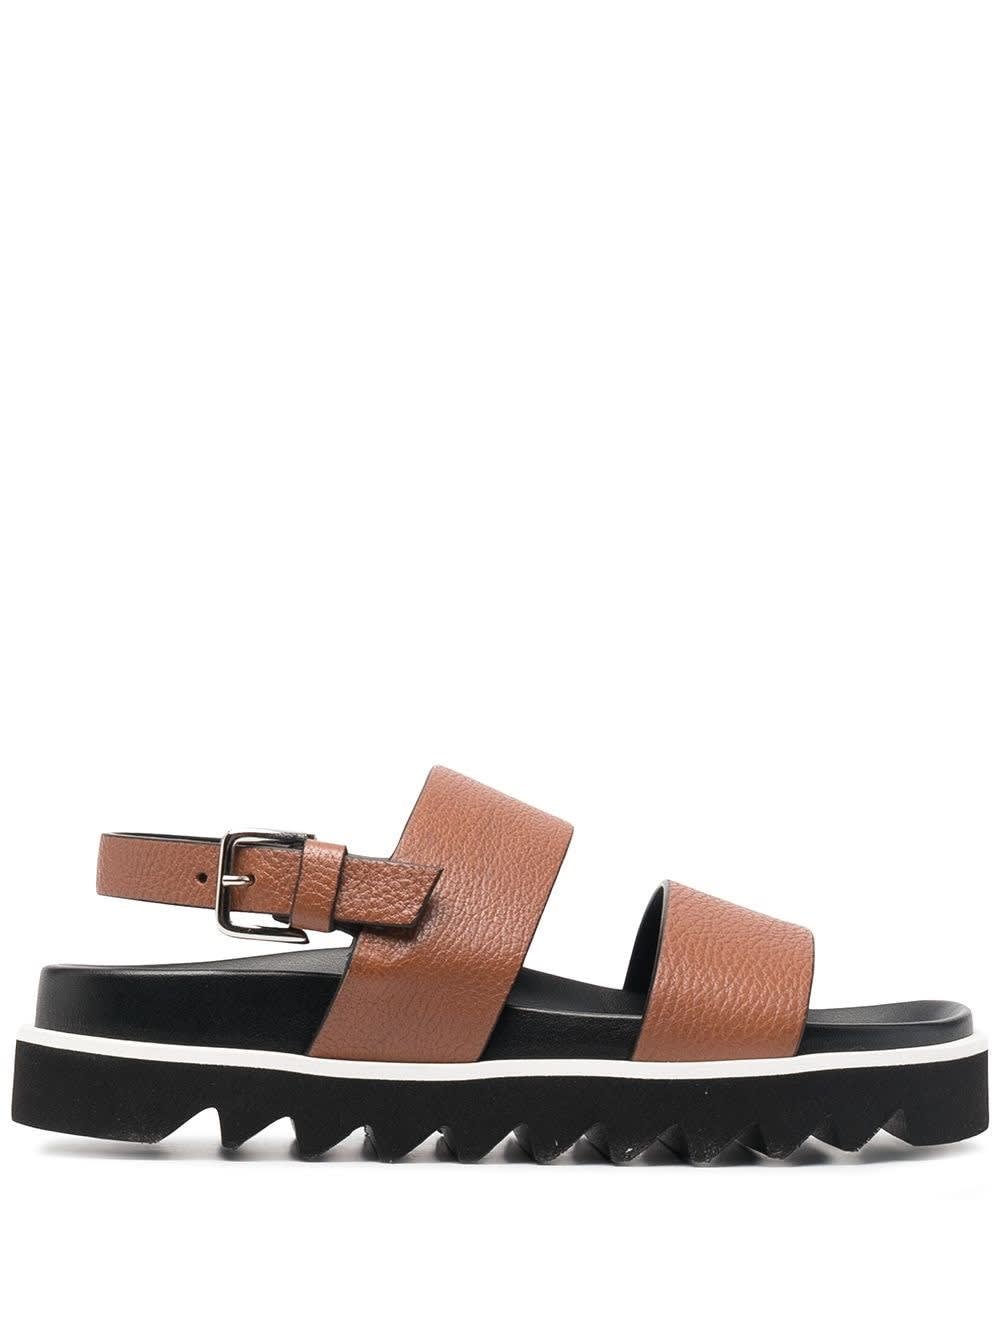 Parosh Brown Leather Sandals With Non-slip Sole